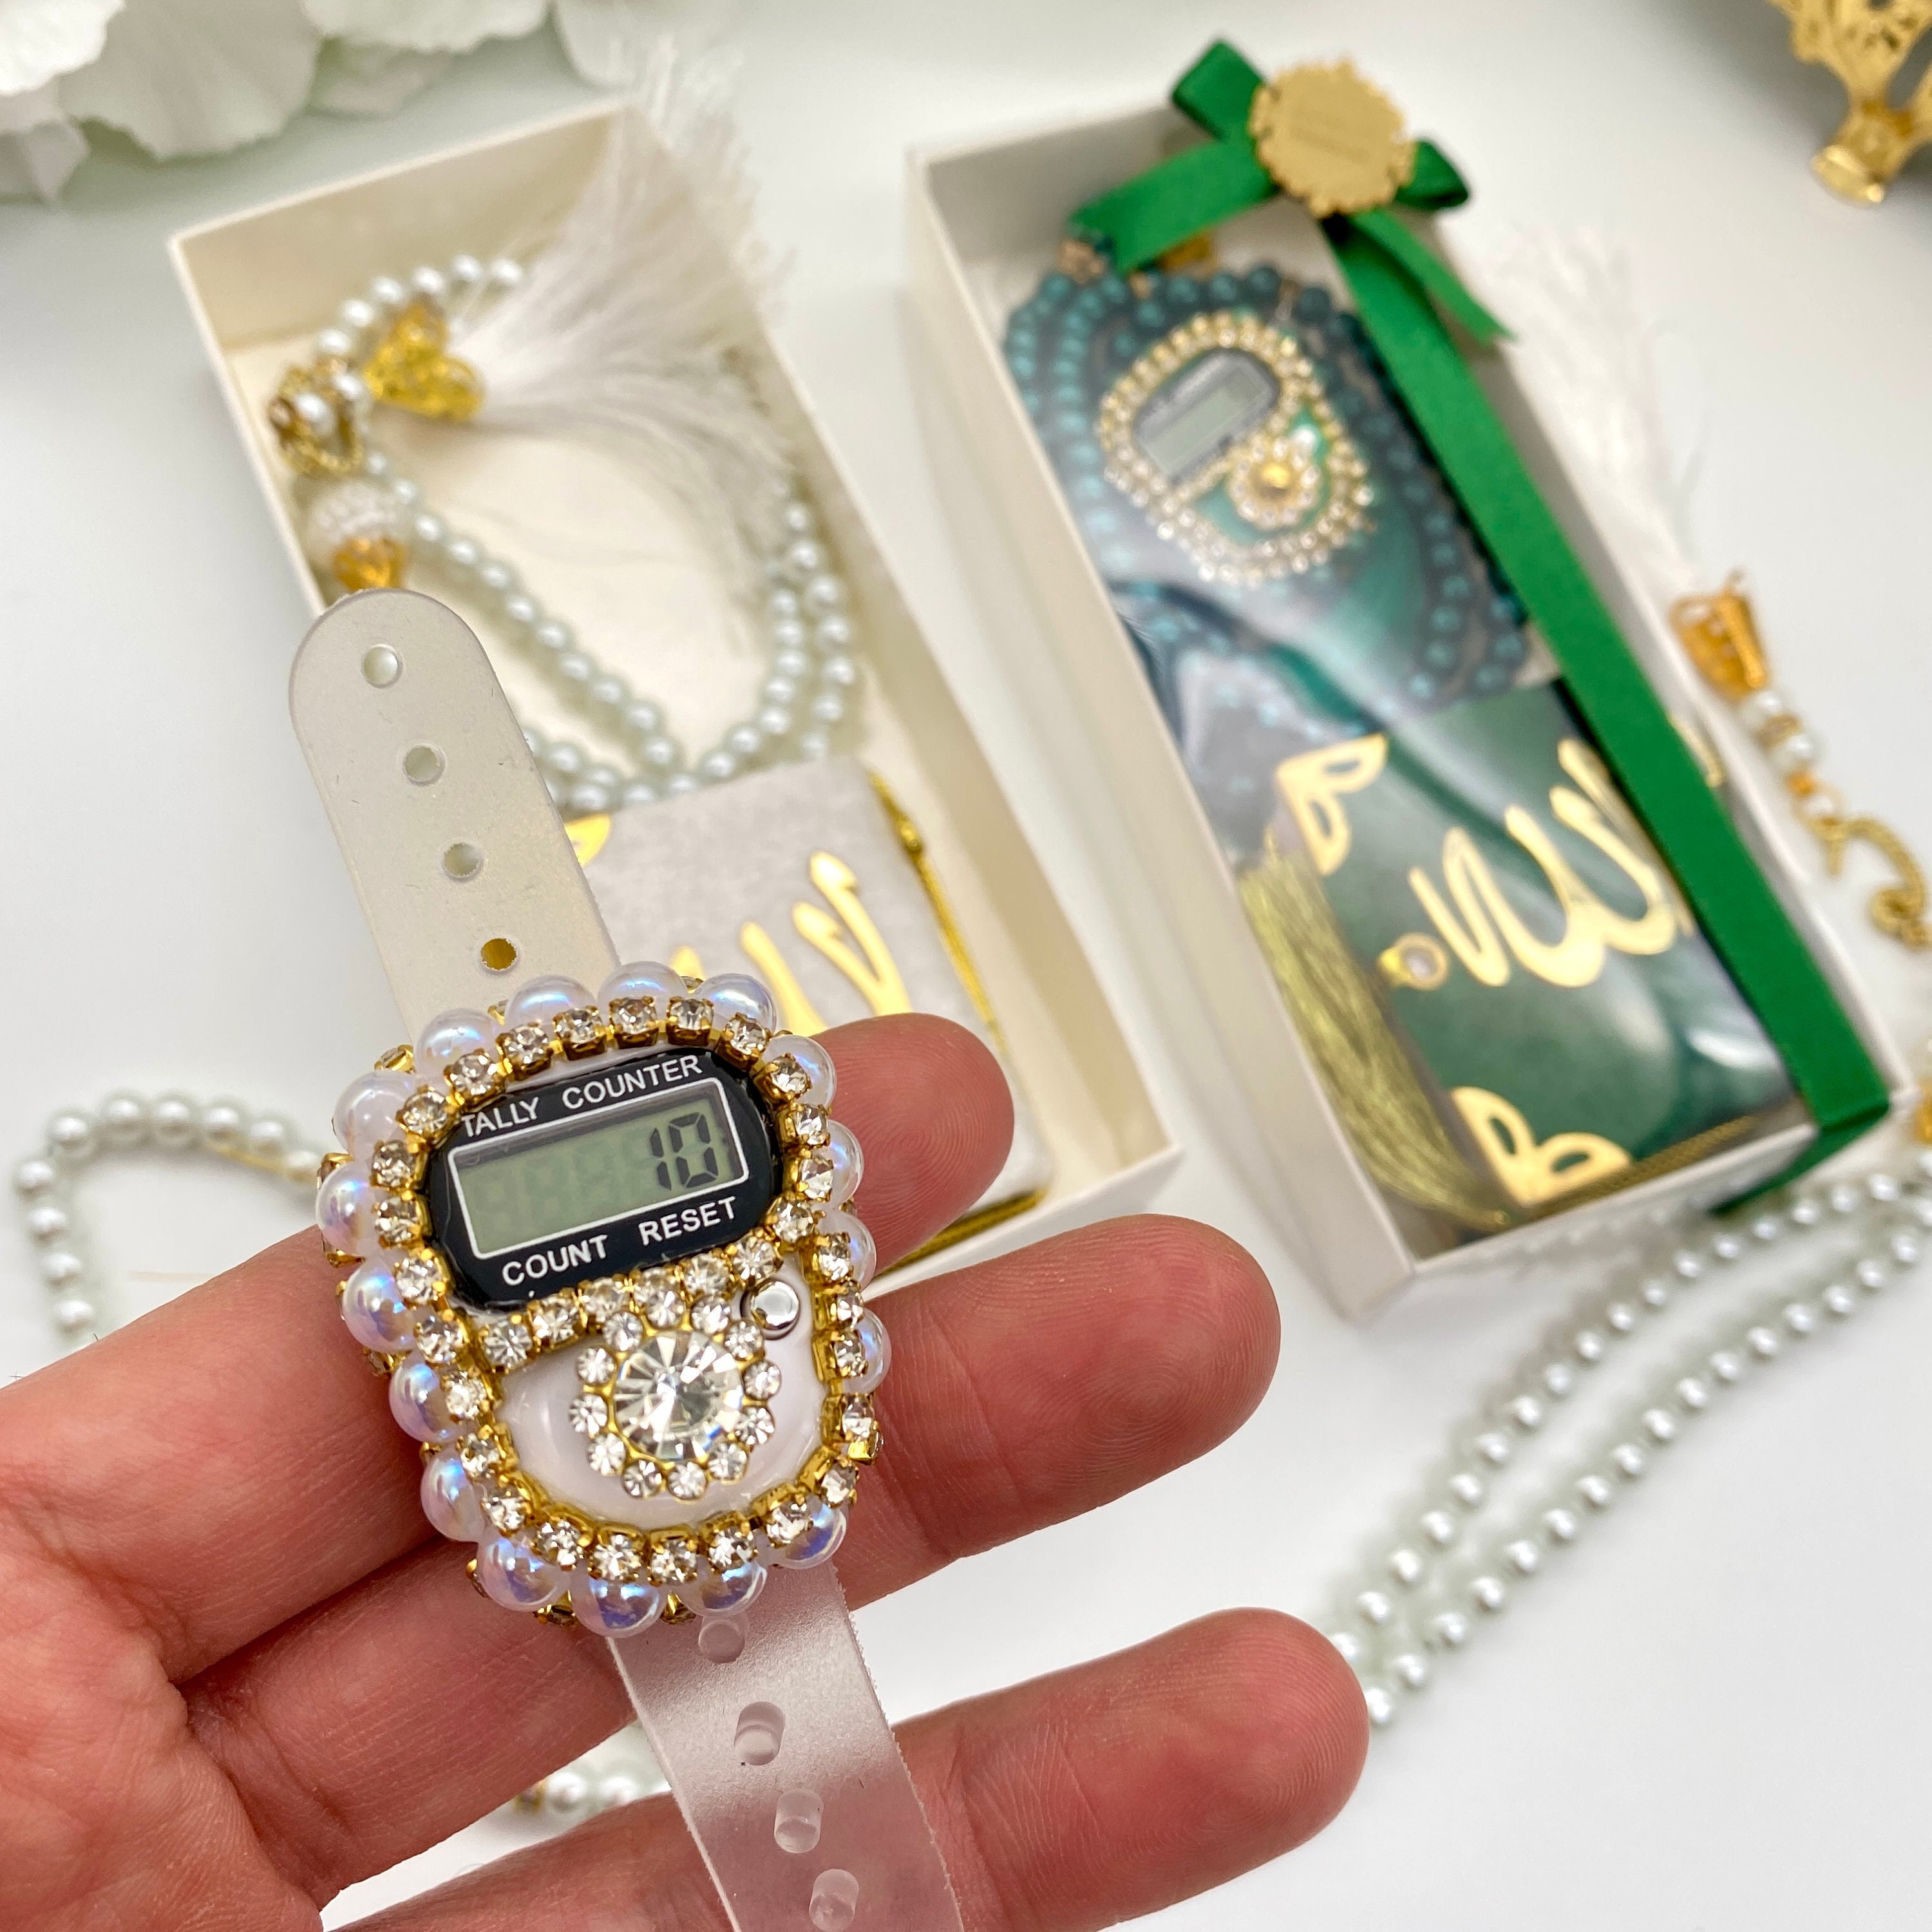 Islamic Tasbih Counter Ring Tally Counter Electric Digital with LED خاتم  التسبيح